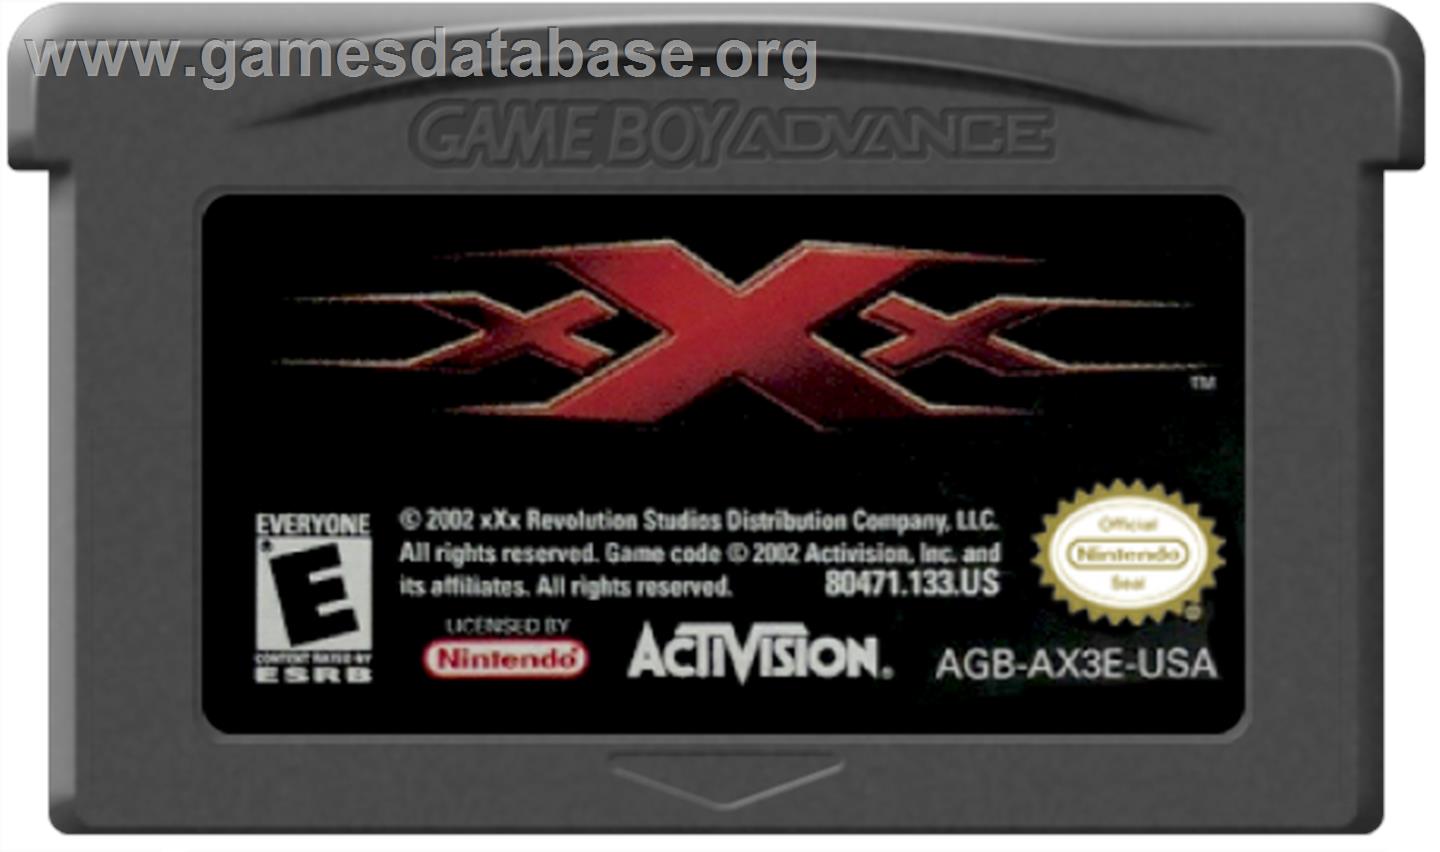 xXx - Nintendo Game Boy Advance - Artwork - Cartridge